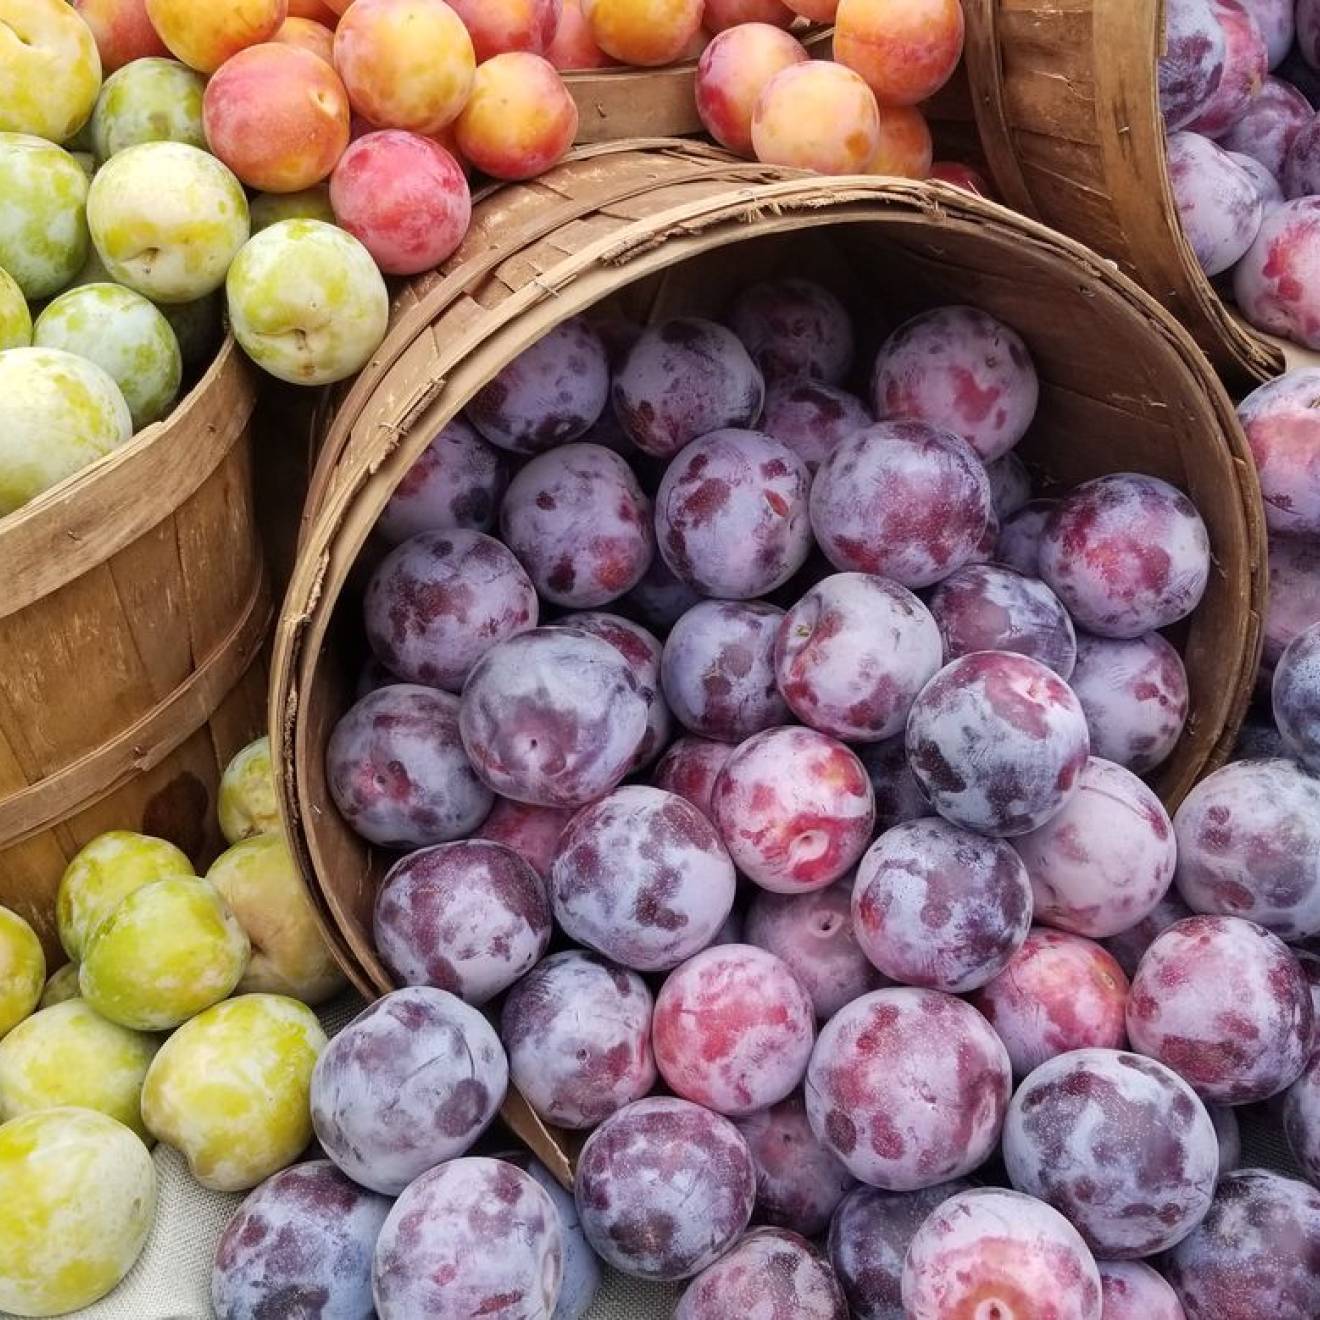 Fruit at a farmer's market